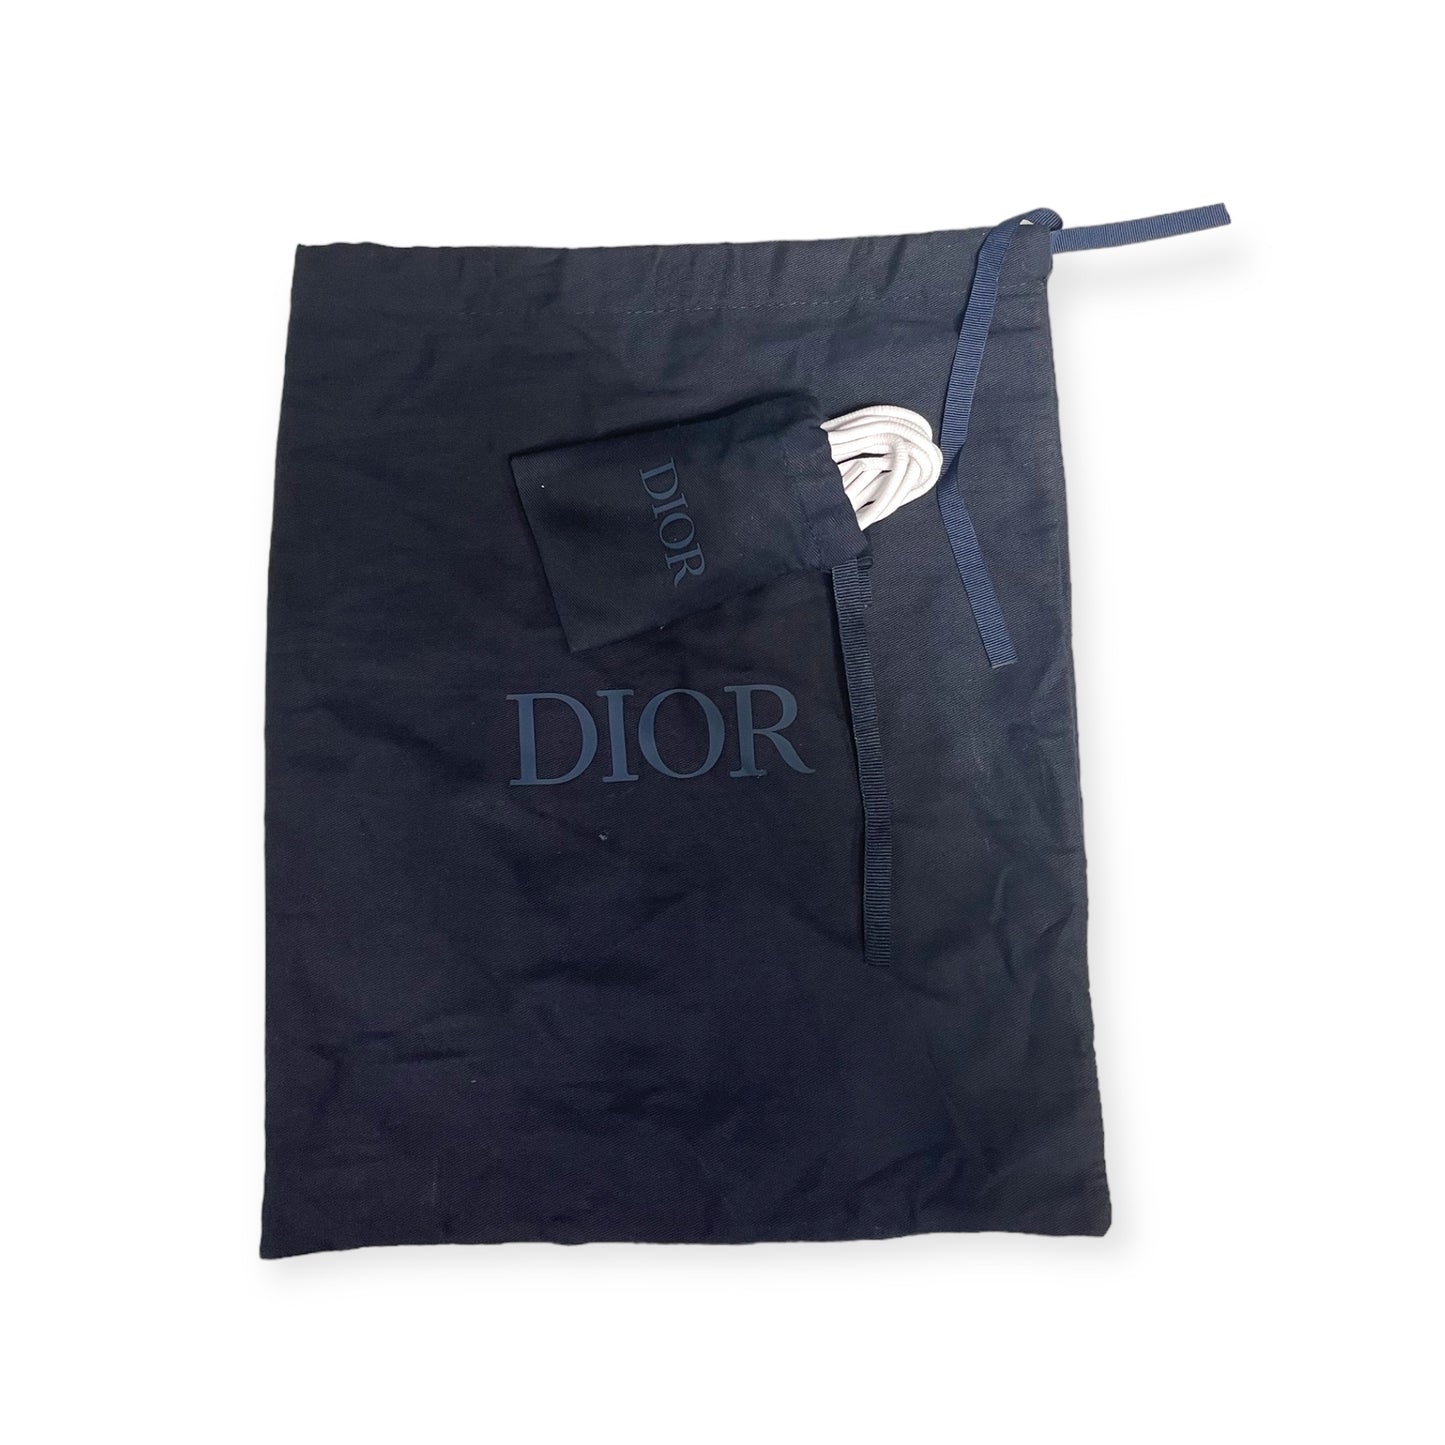 Christian Dior B30 Sneaker size 41